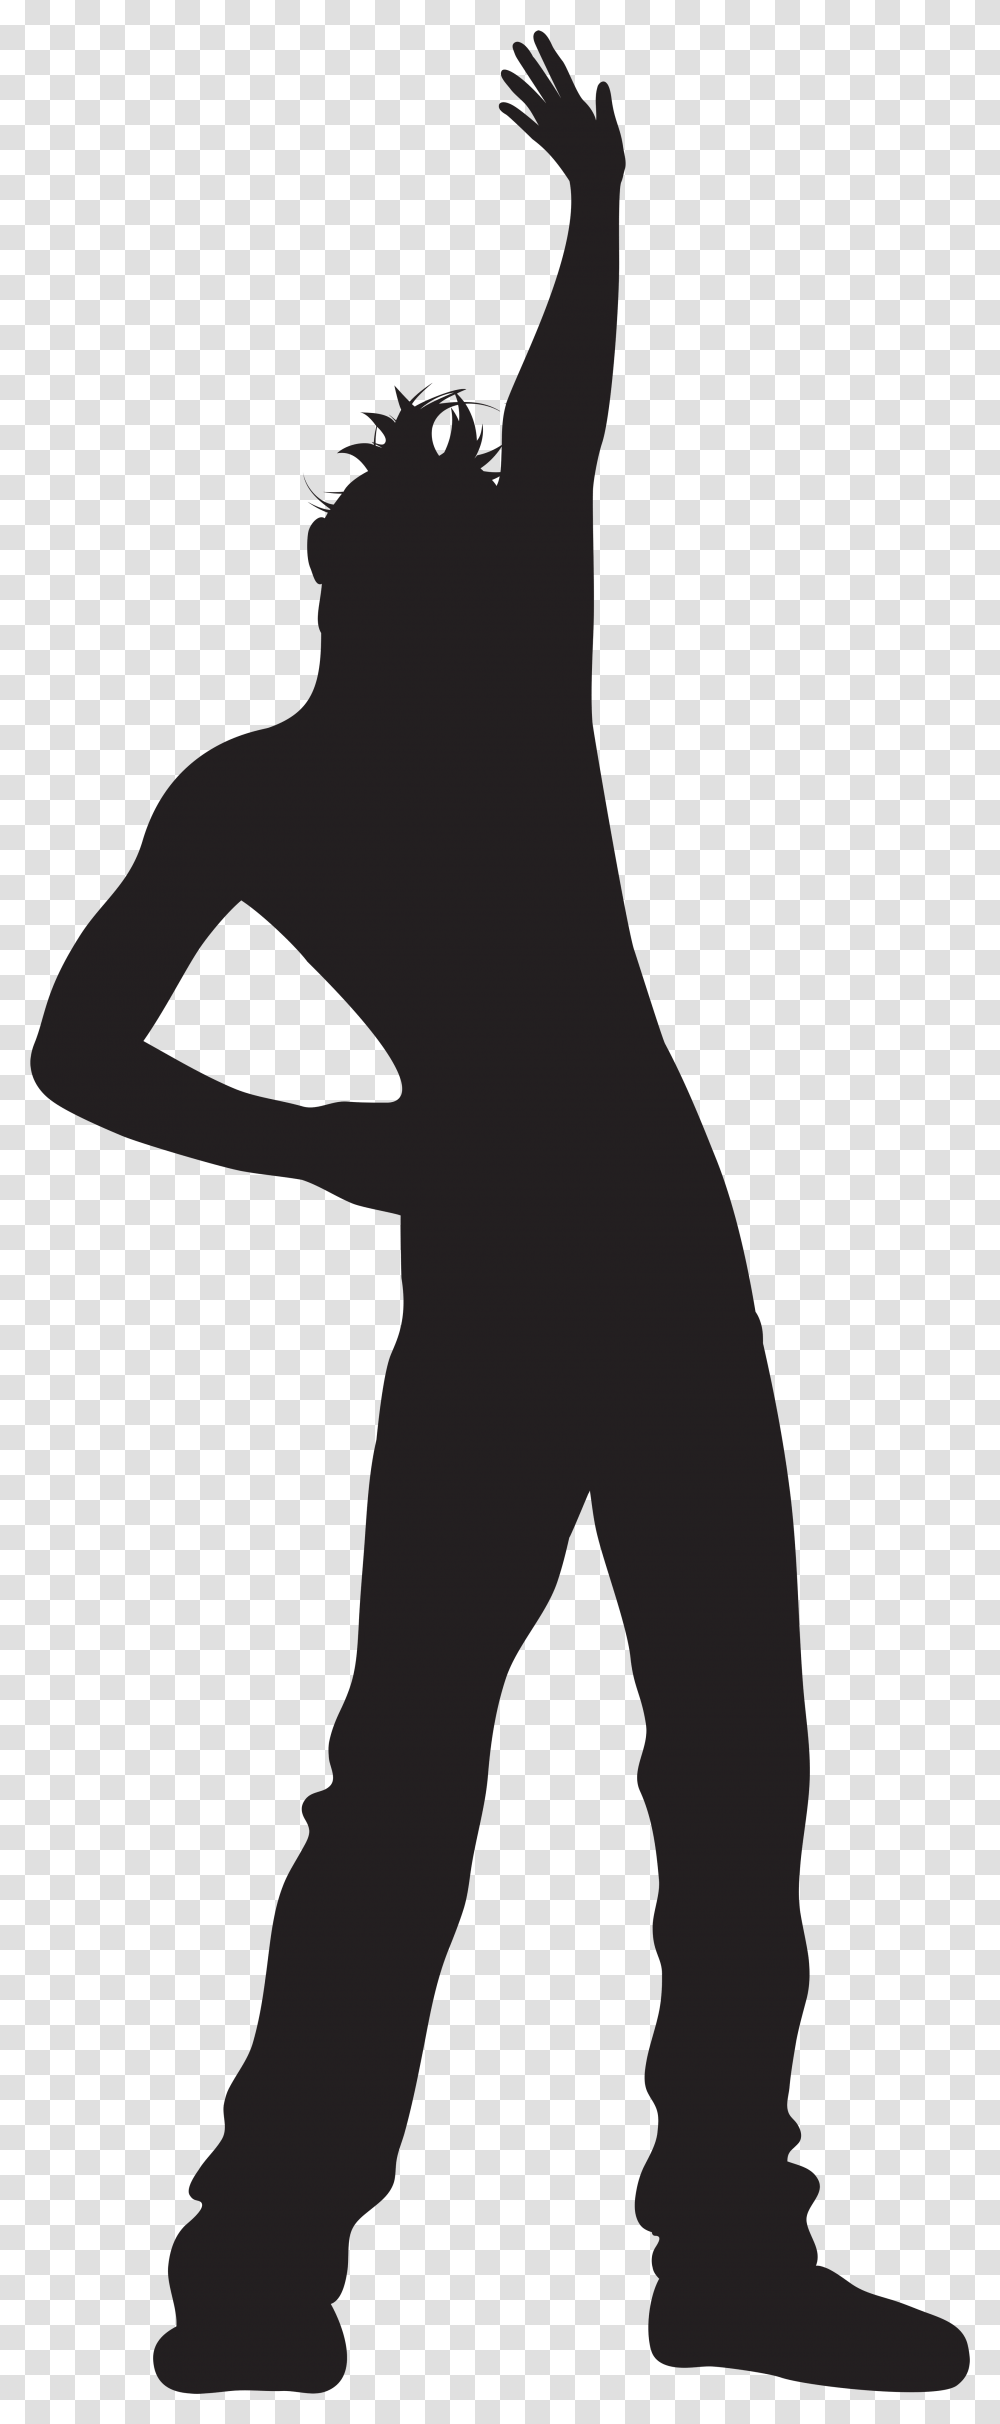 Silhouette Man Dancing Man Silhouette, Person, Human, Standing, Kneeling Transparent Png